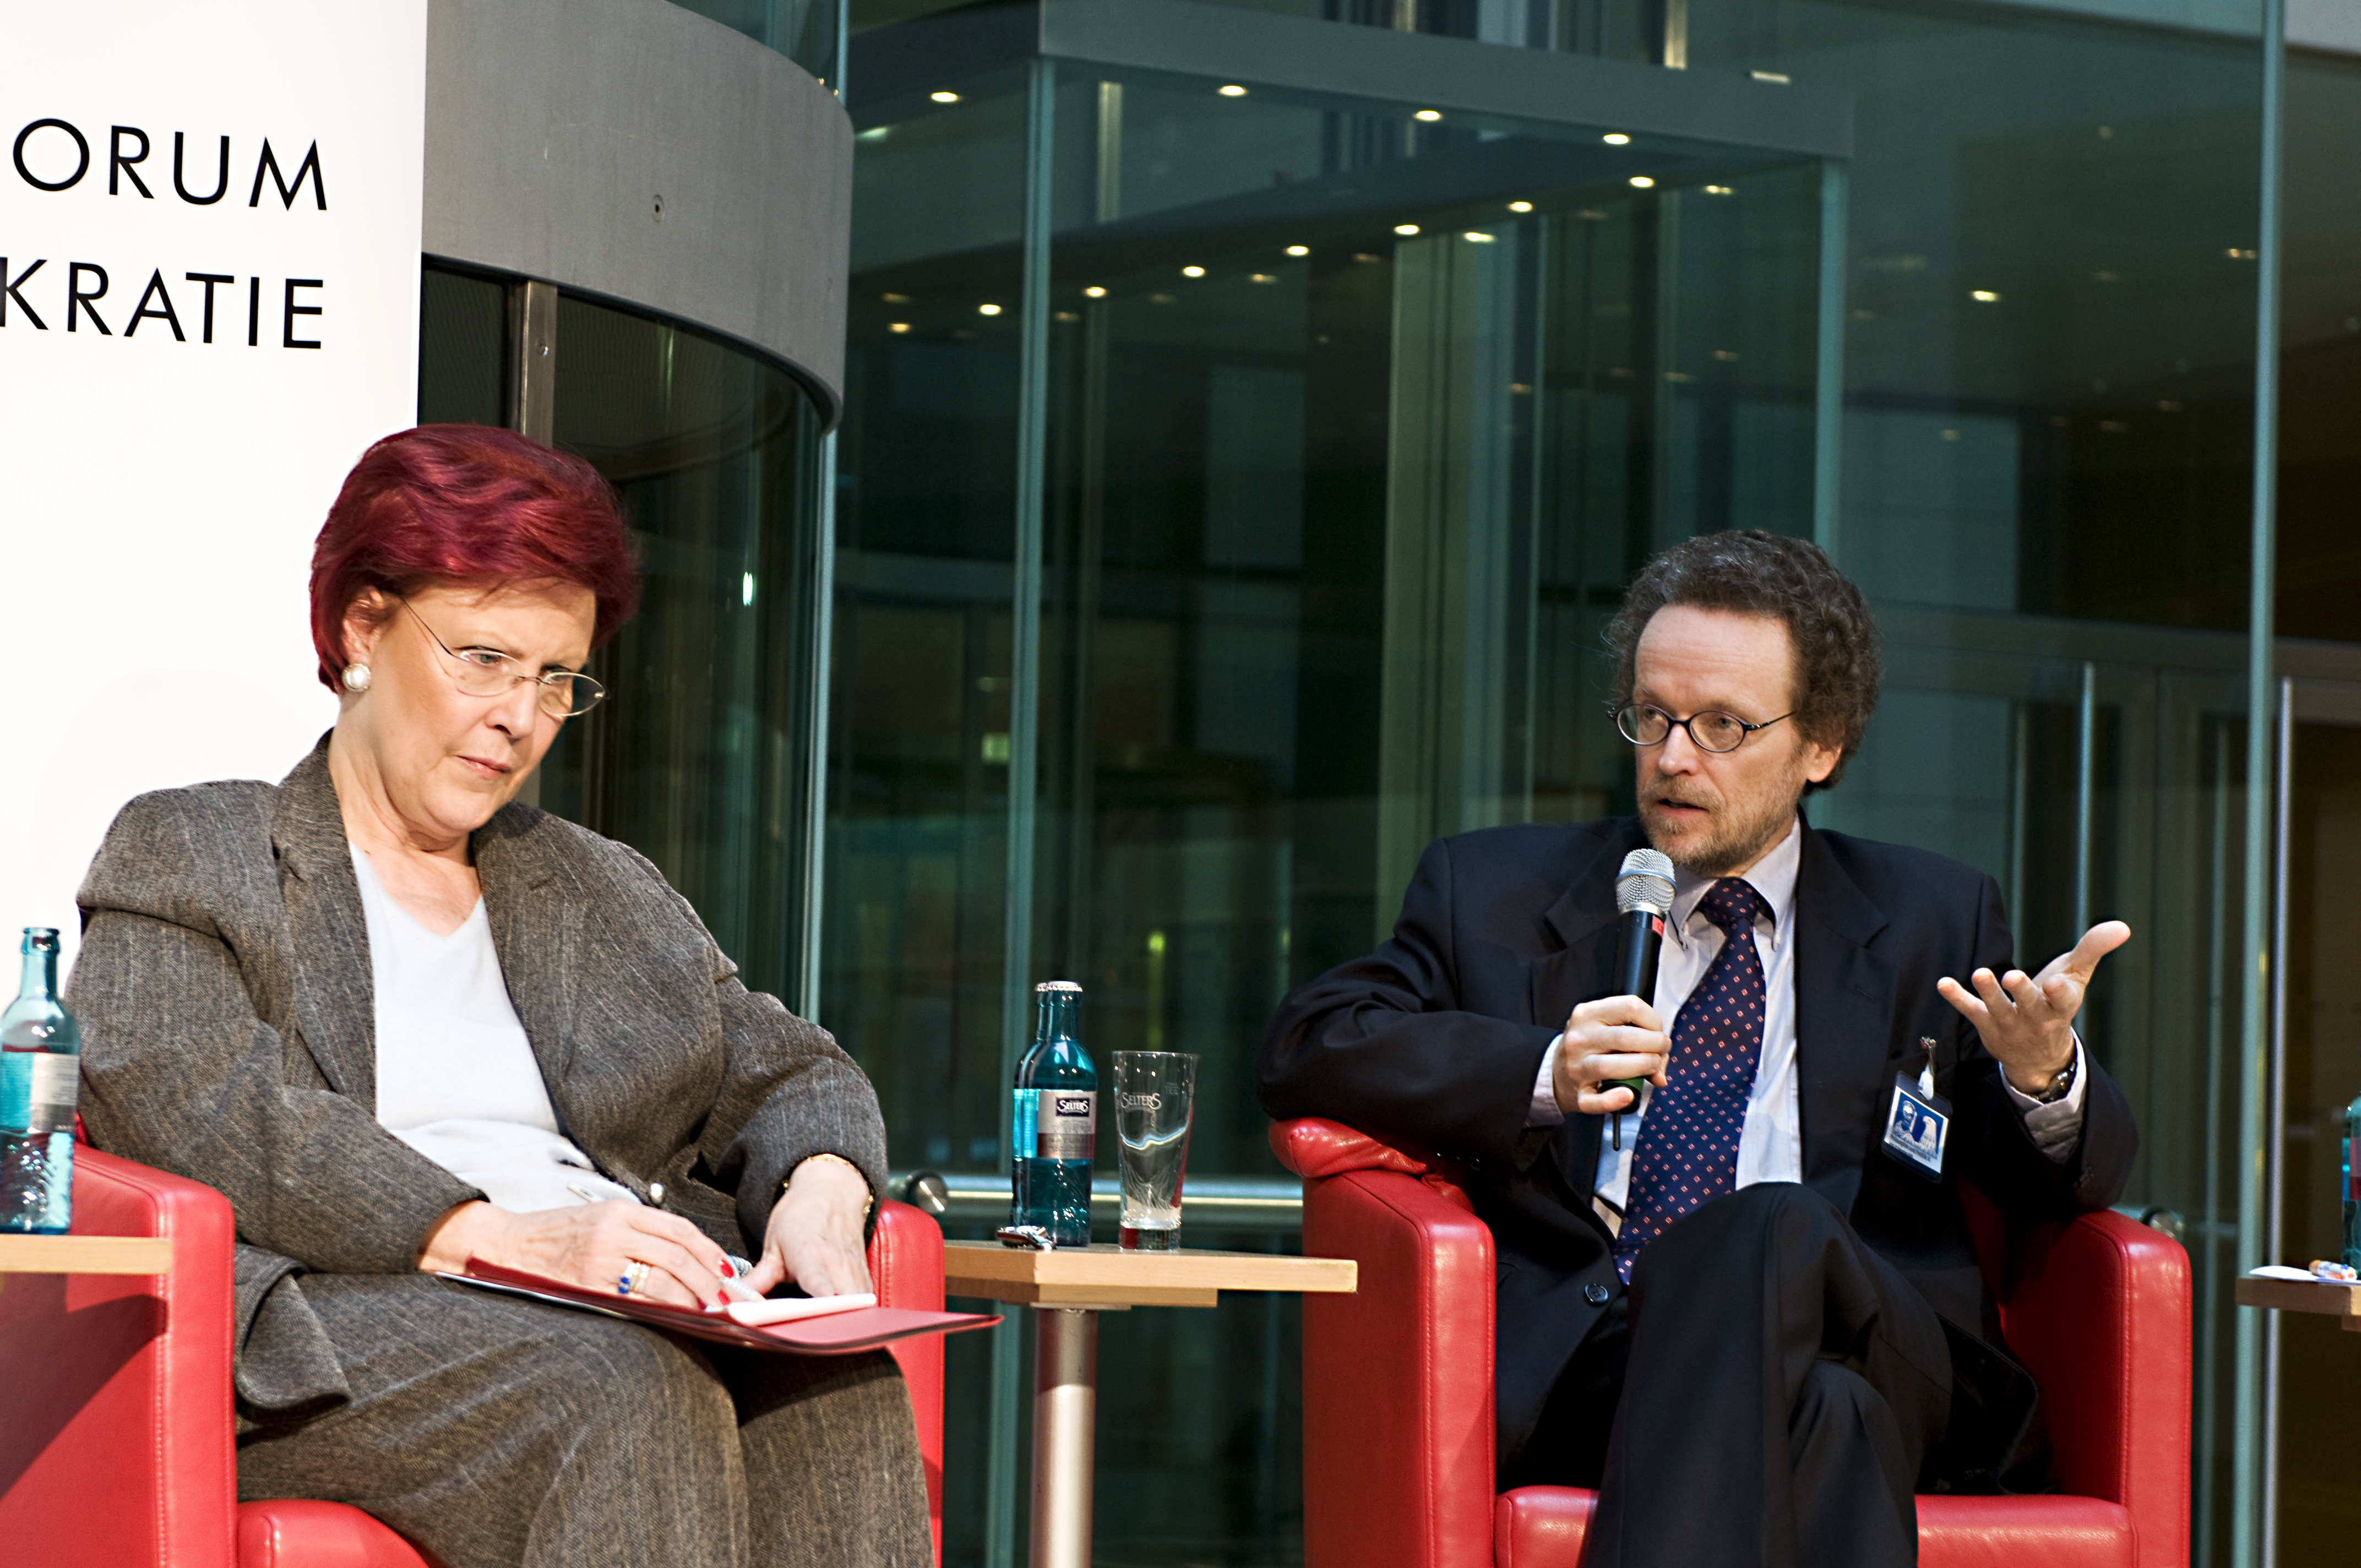 Heidemarie Wieczorek-Zeul und Thomas Pogge, Kulturforum der Sozialdemokratie, Berlin, 2008